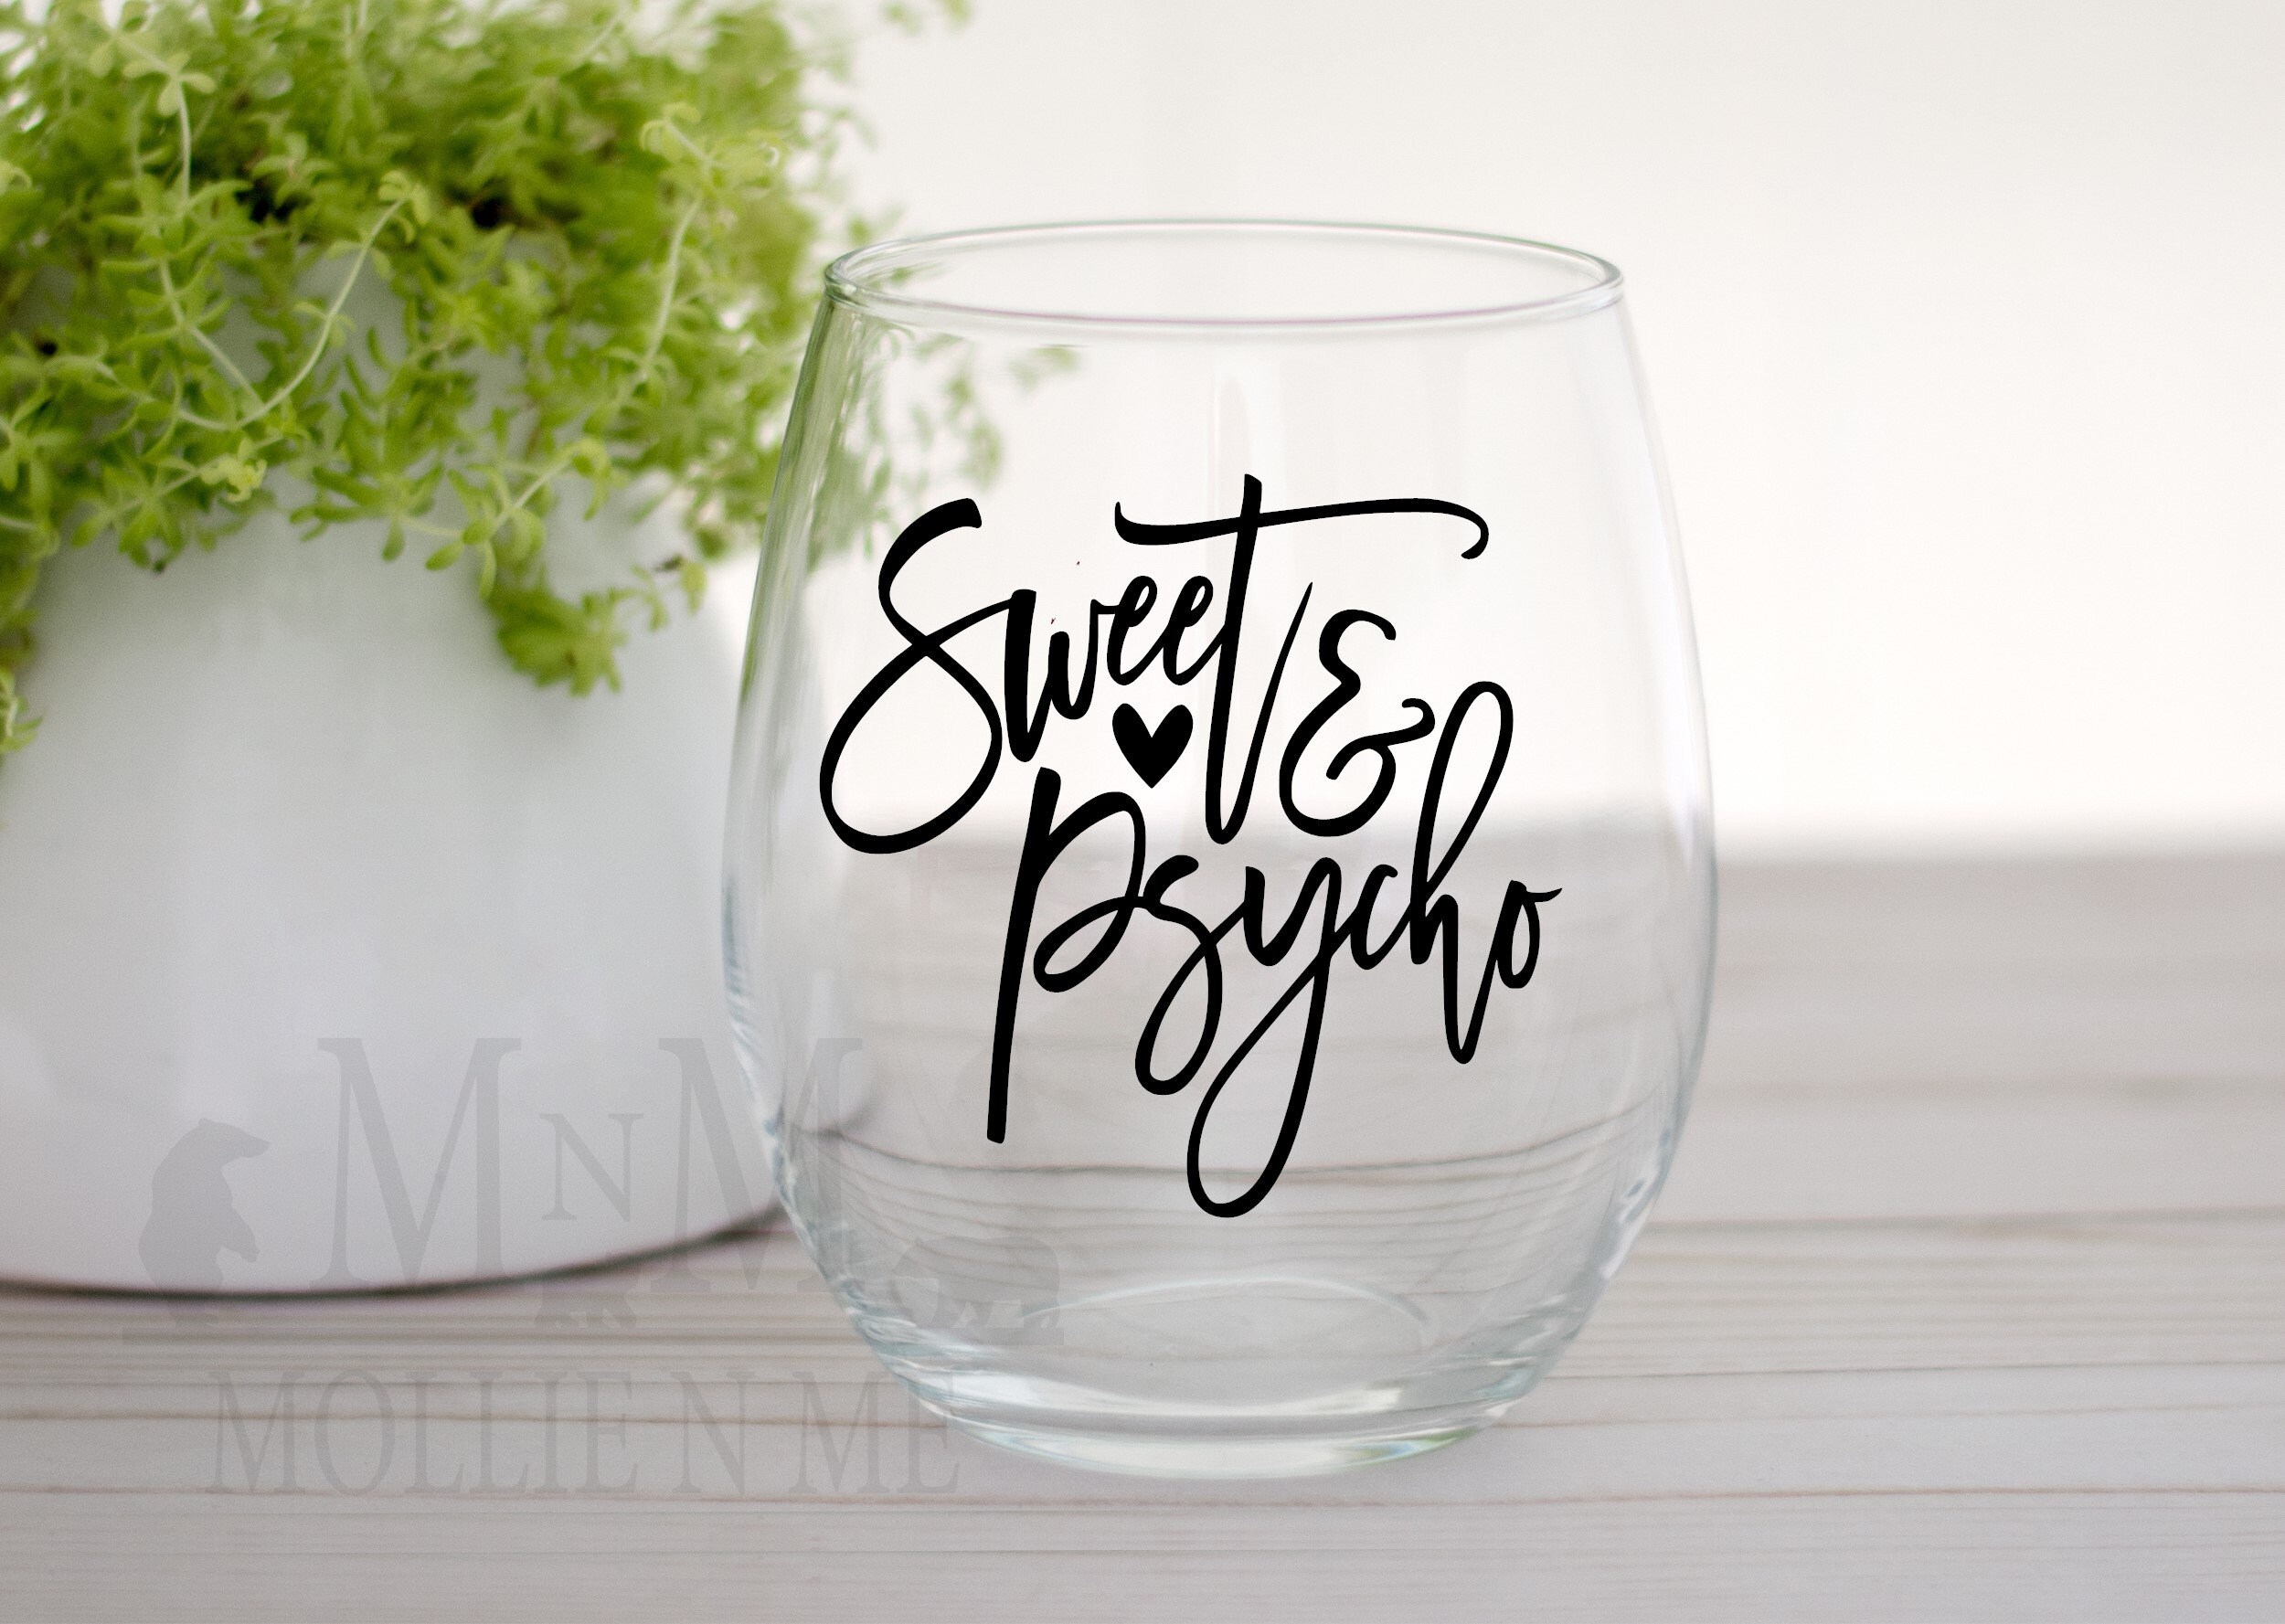 Cute. Psycho, But Cute Witty Wine Glass